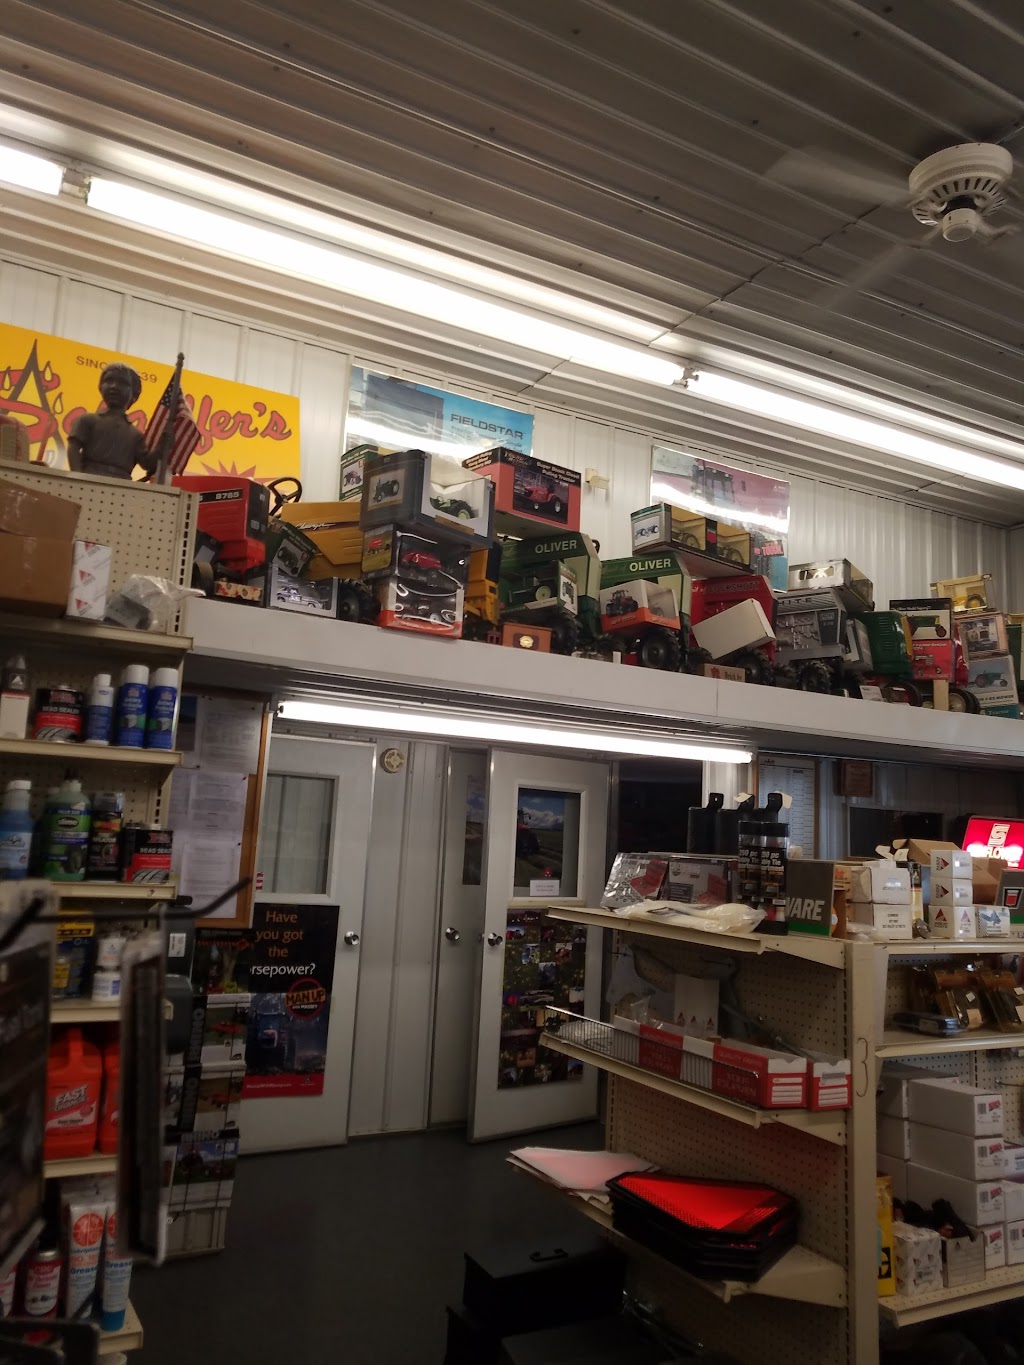 Maibach Tractor LLC | 13701 Eby Rd, Creston, OH 44217, USA | Phone: (330) 939-4192